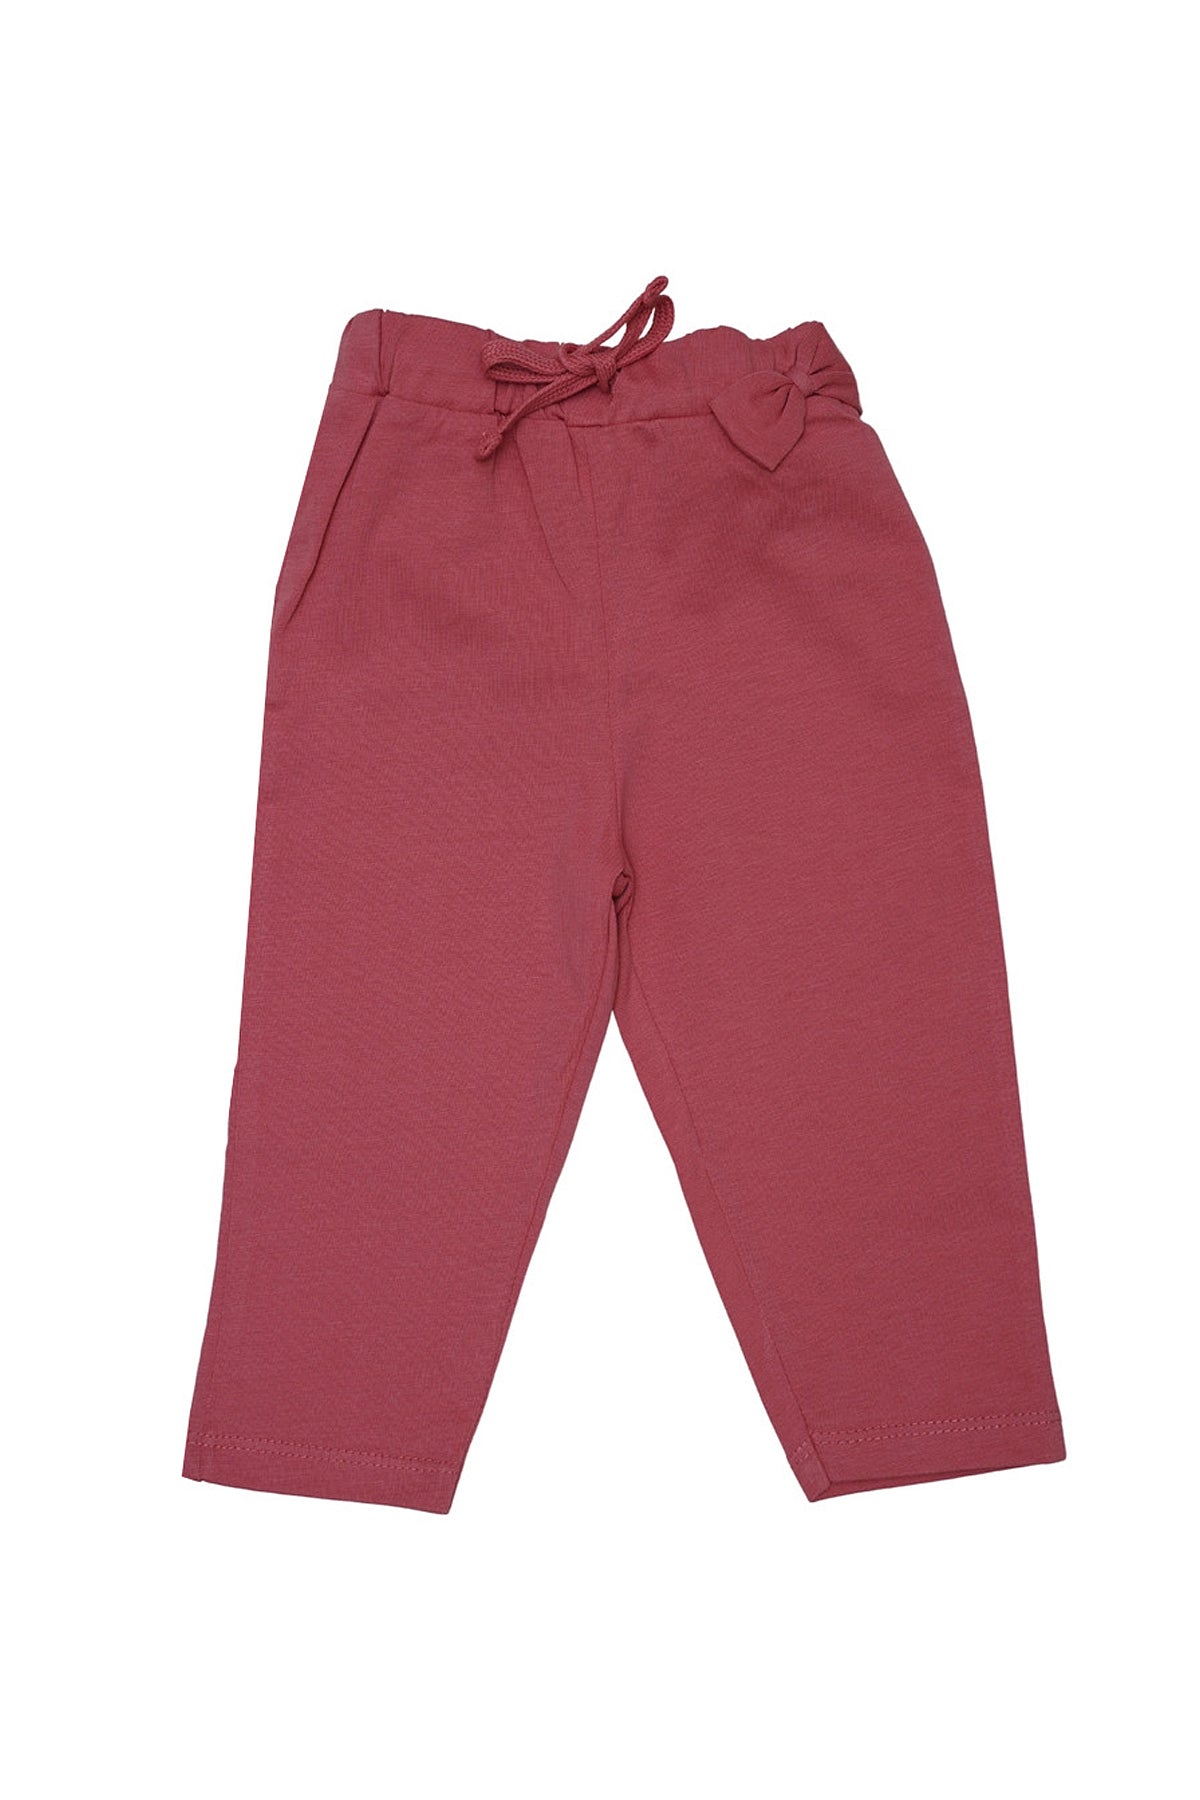 Pajama (Pack Of 2) (IGPP-074)